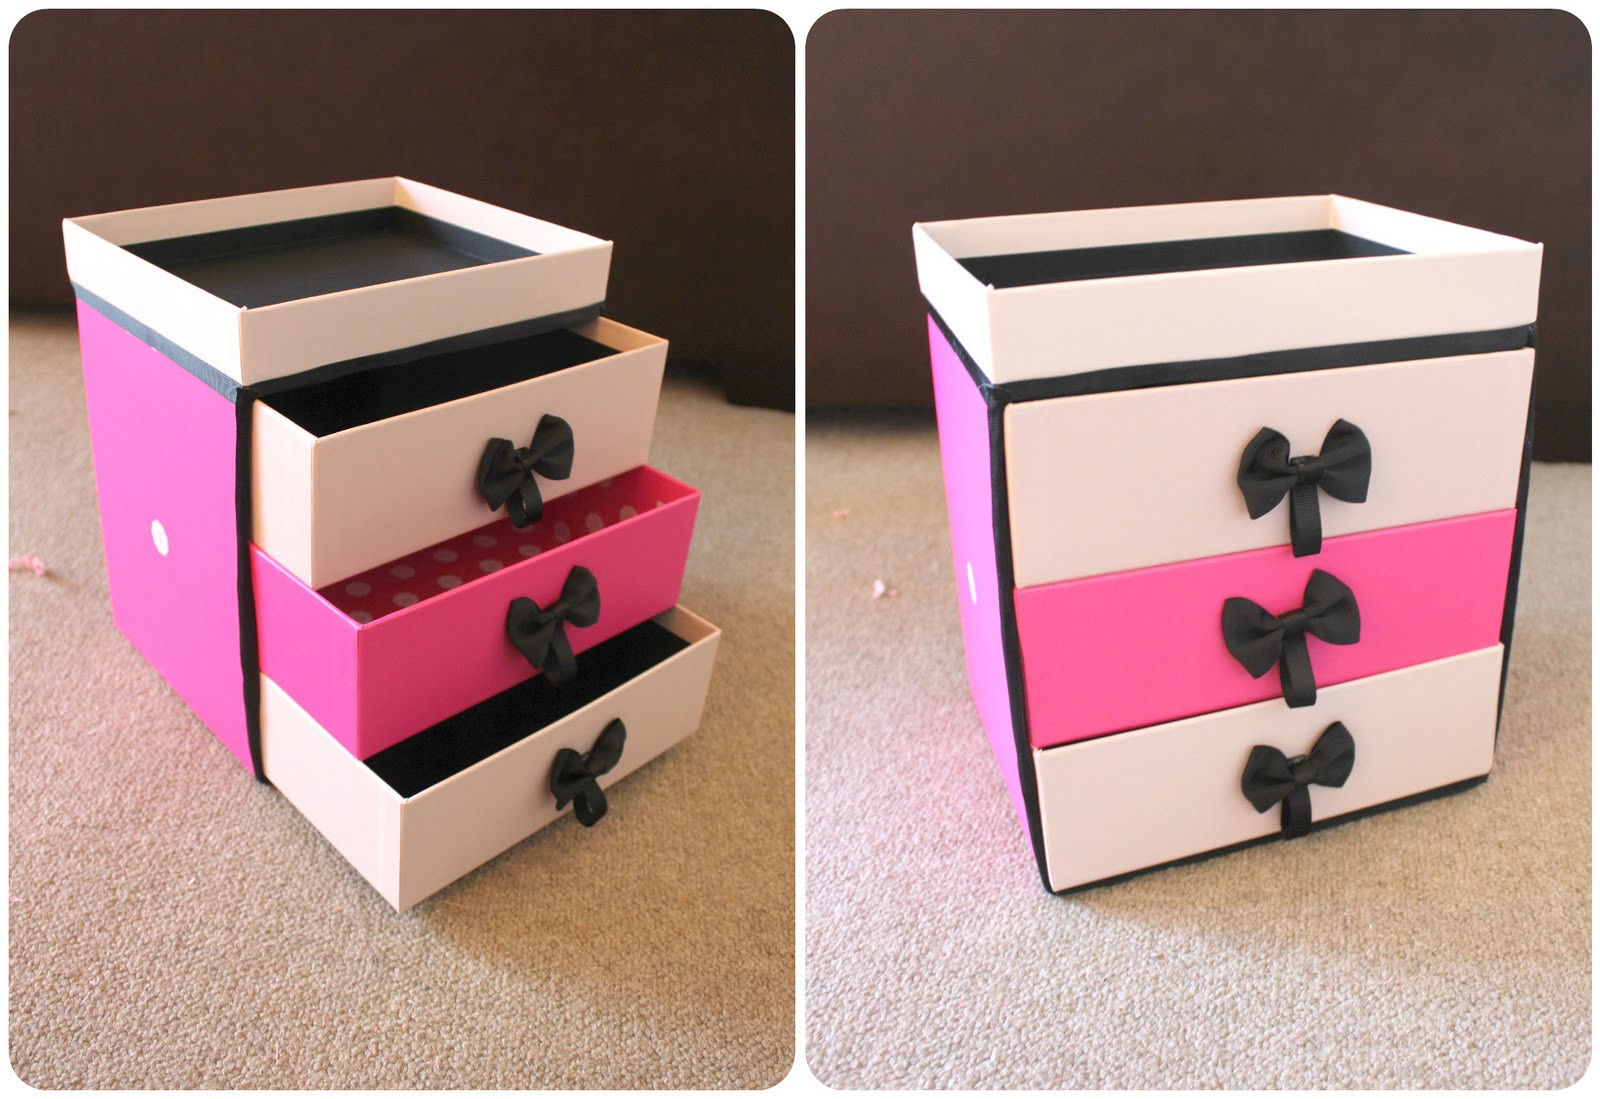 Best ideas about DIY Makeup Organizer Shoebox
. Save or Pin Peachfizzz DIY Make Up Storage Now.